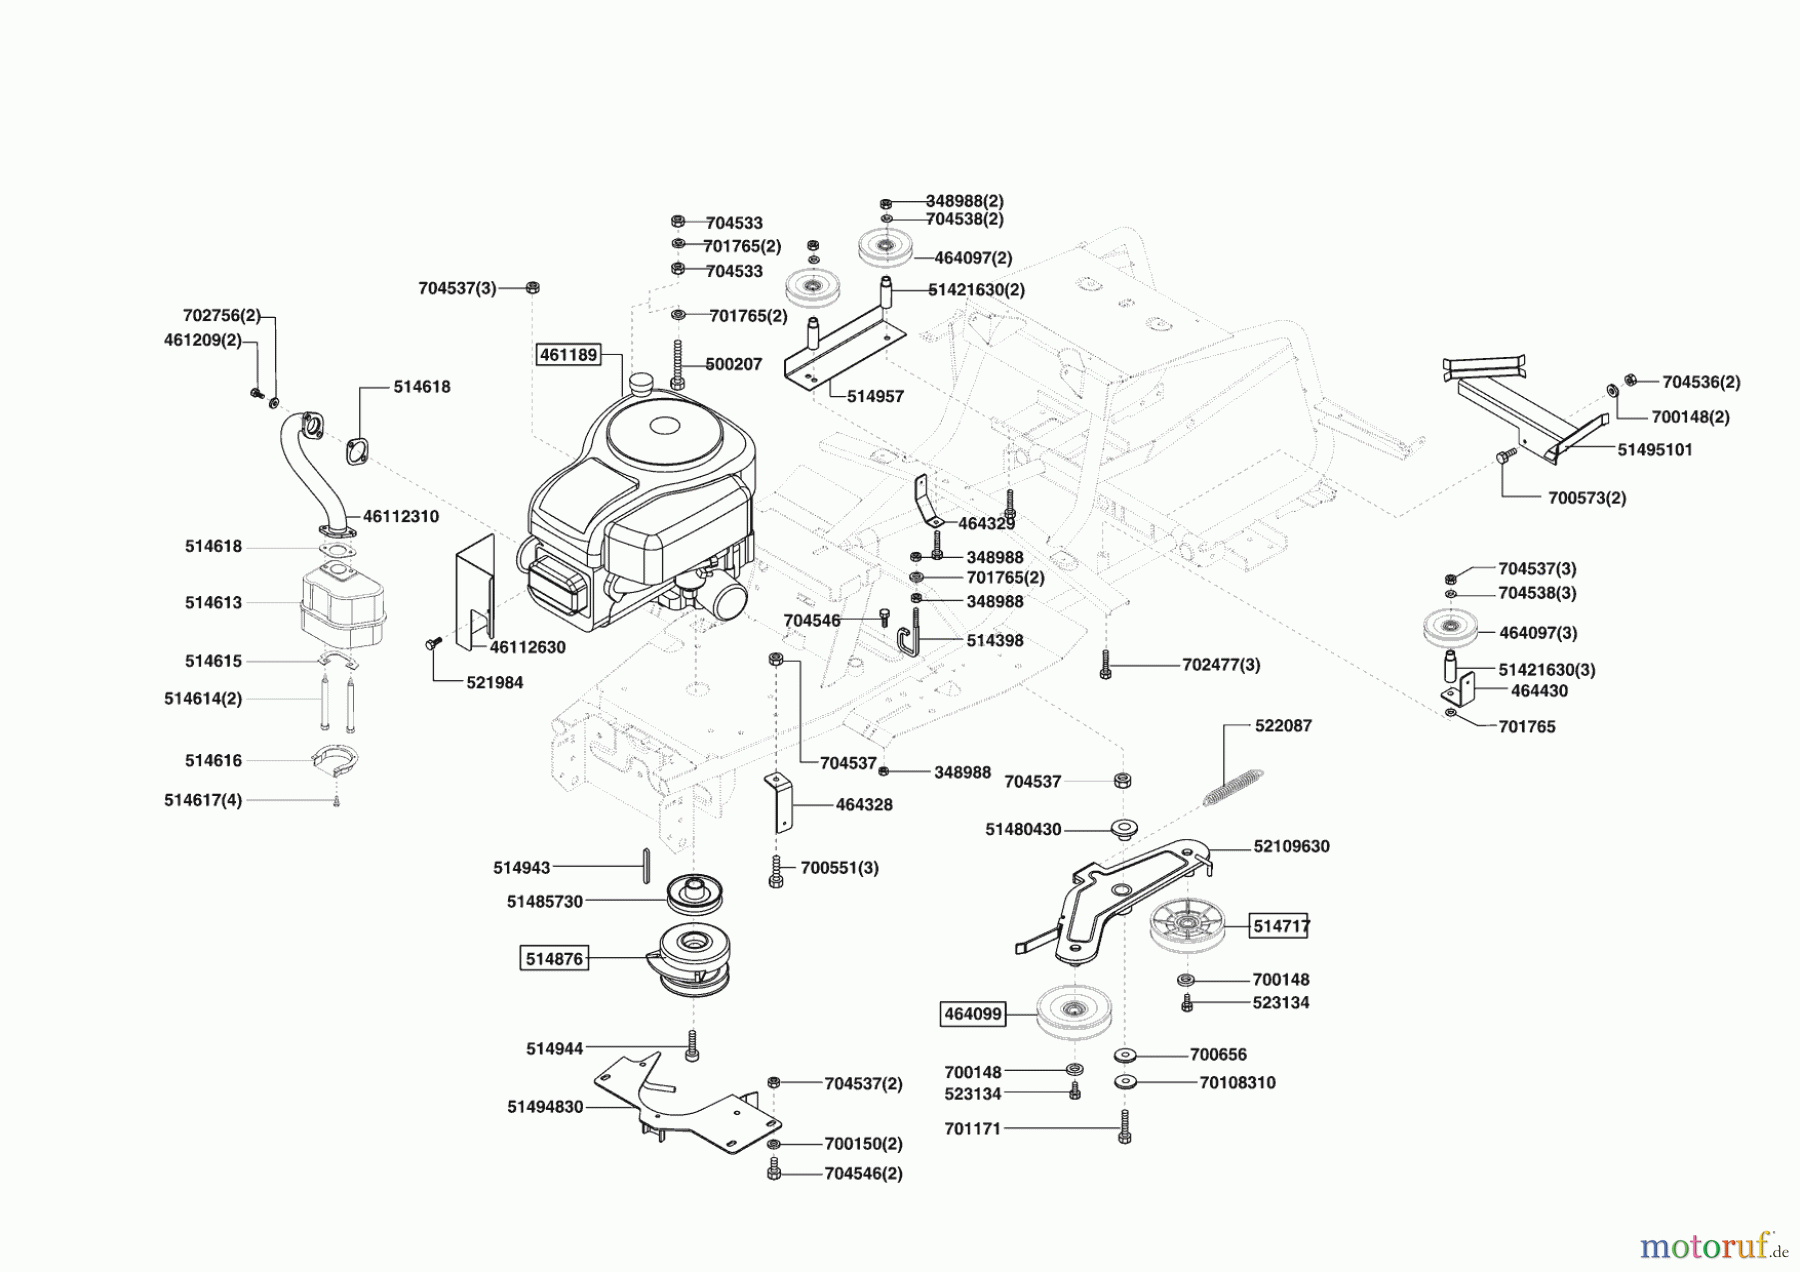  AL-KO Gartentechnik Rasentraktor T 950 (F) ab 03/2009 Seite 4